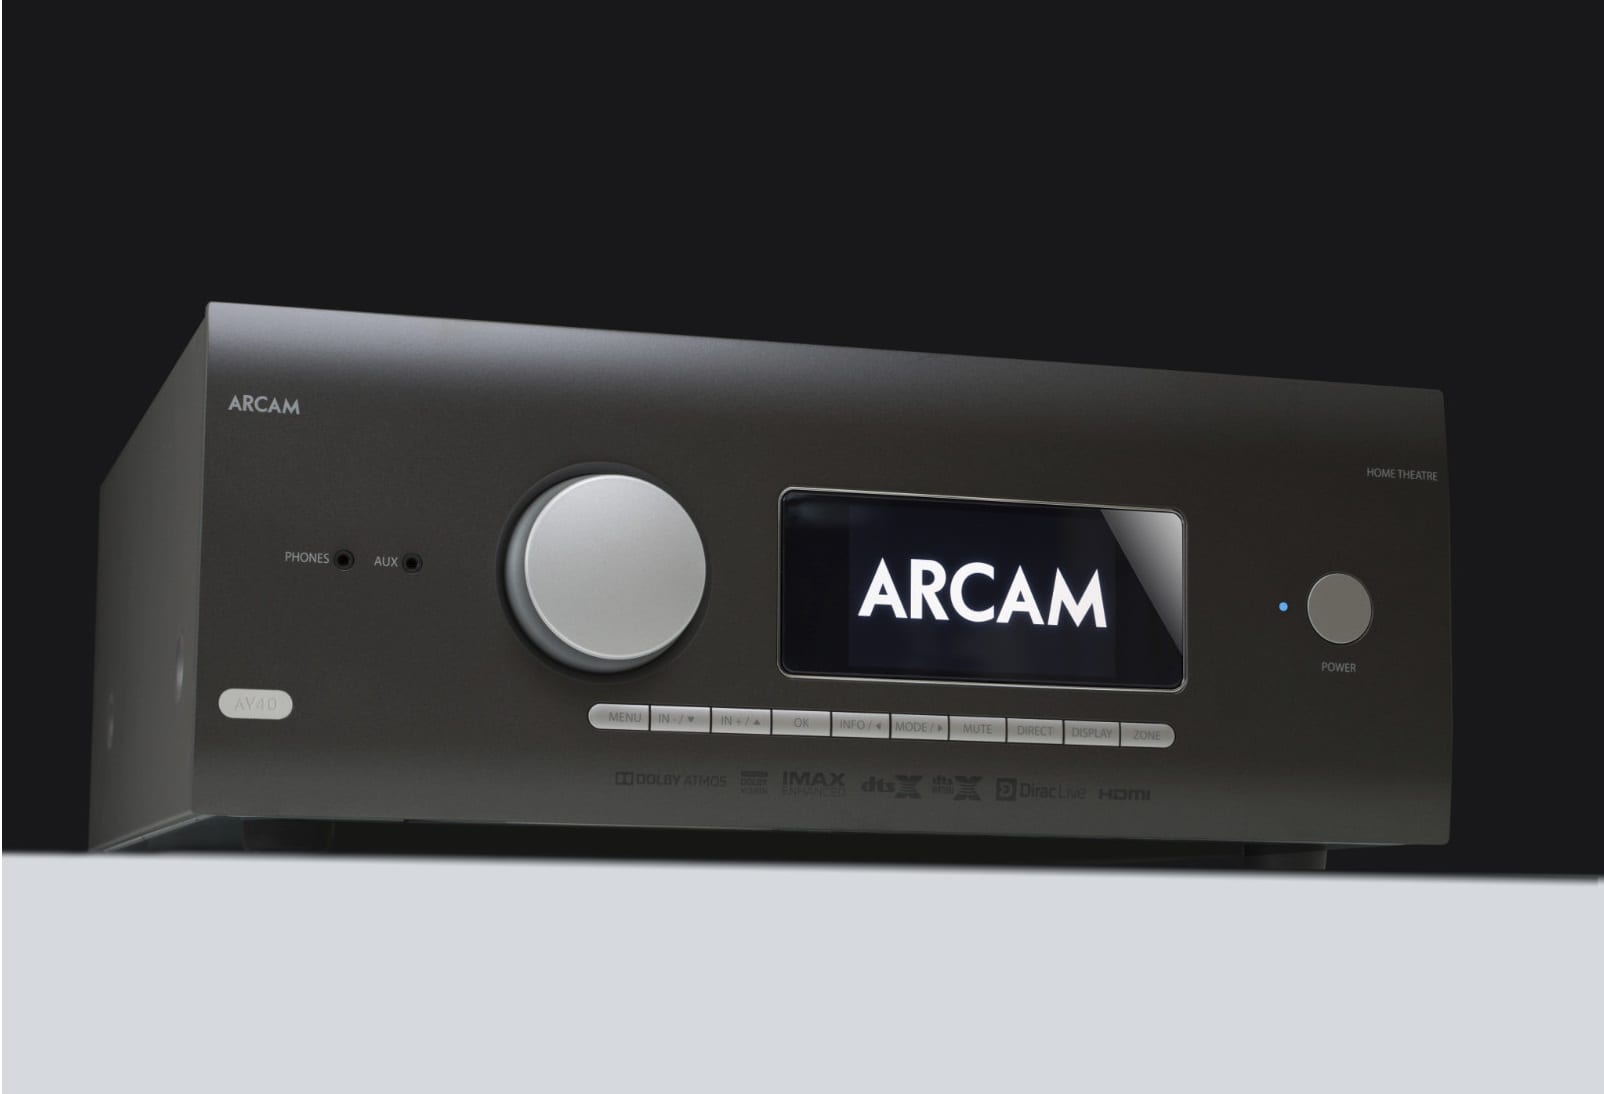 Arcam AV40 - Surround processor